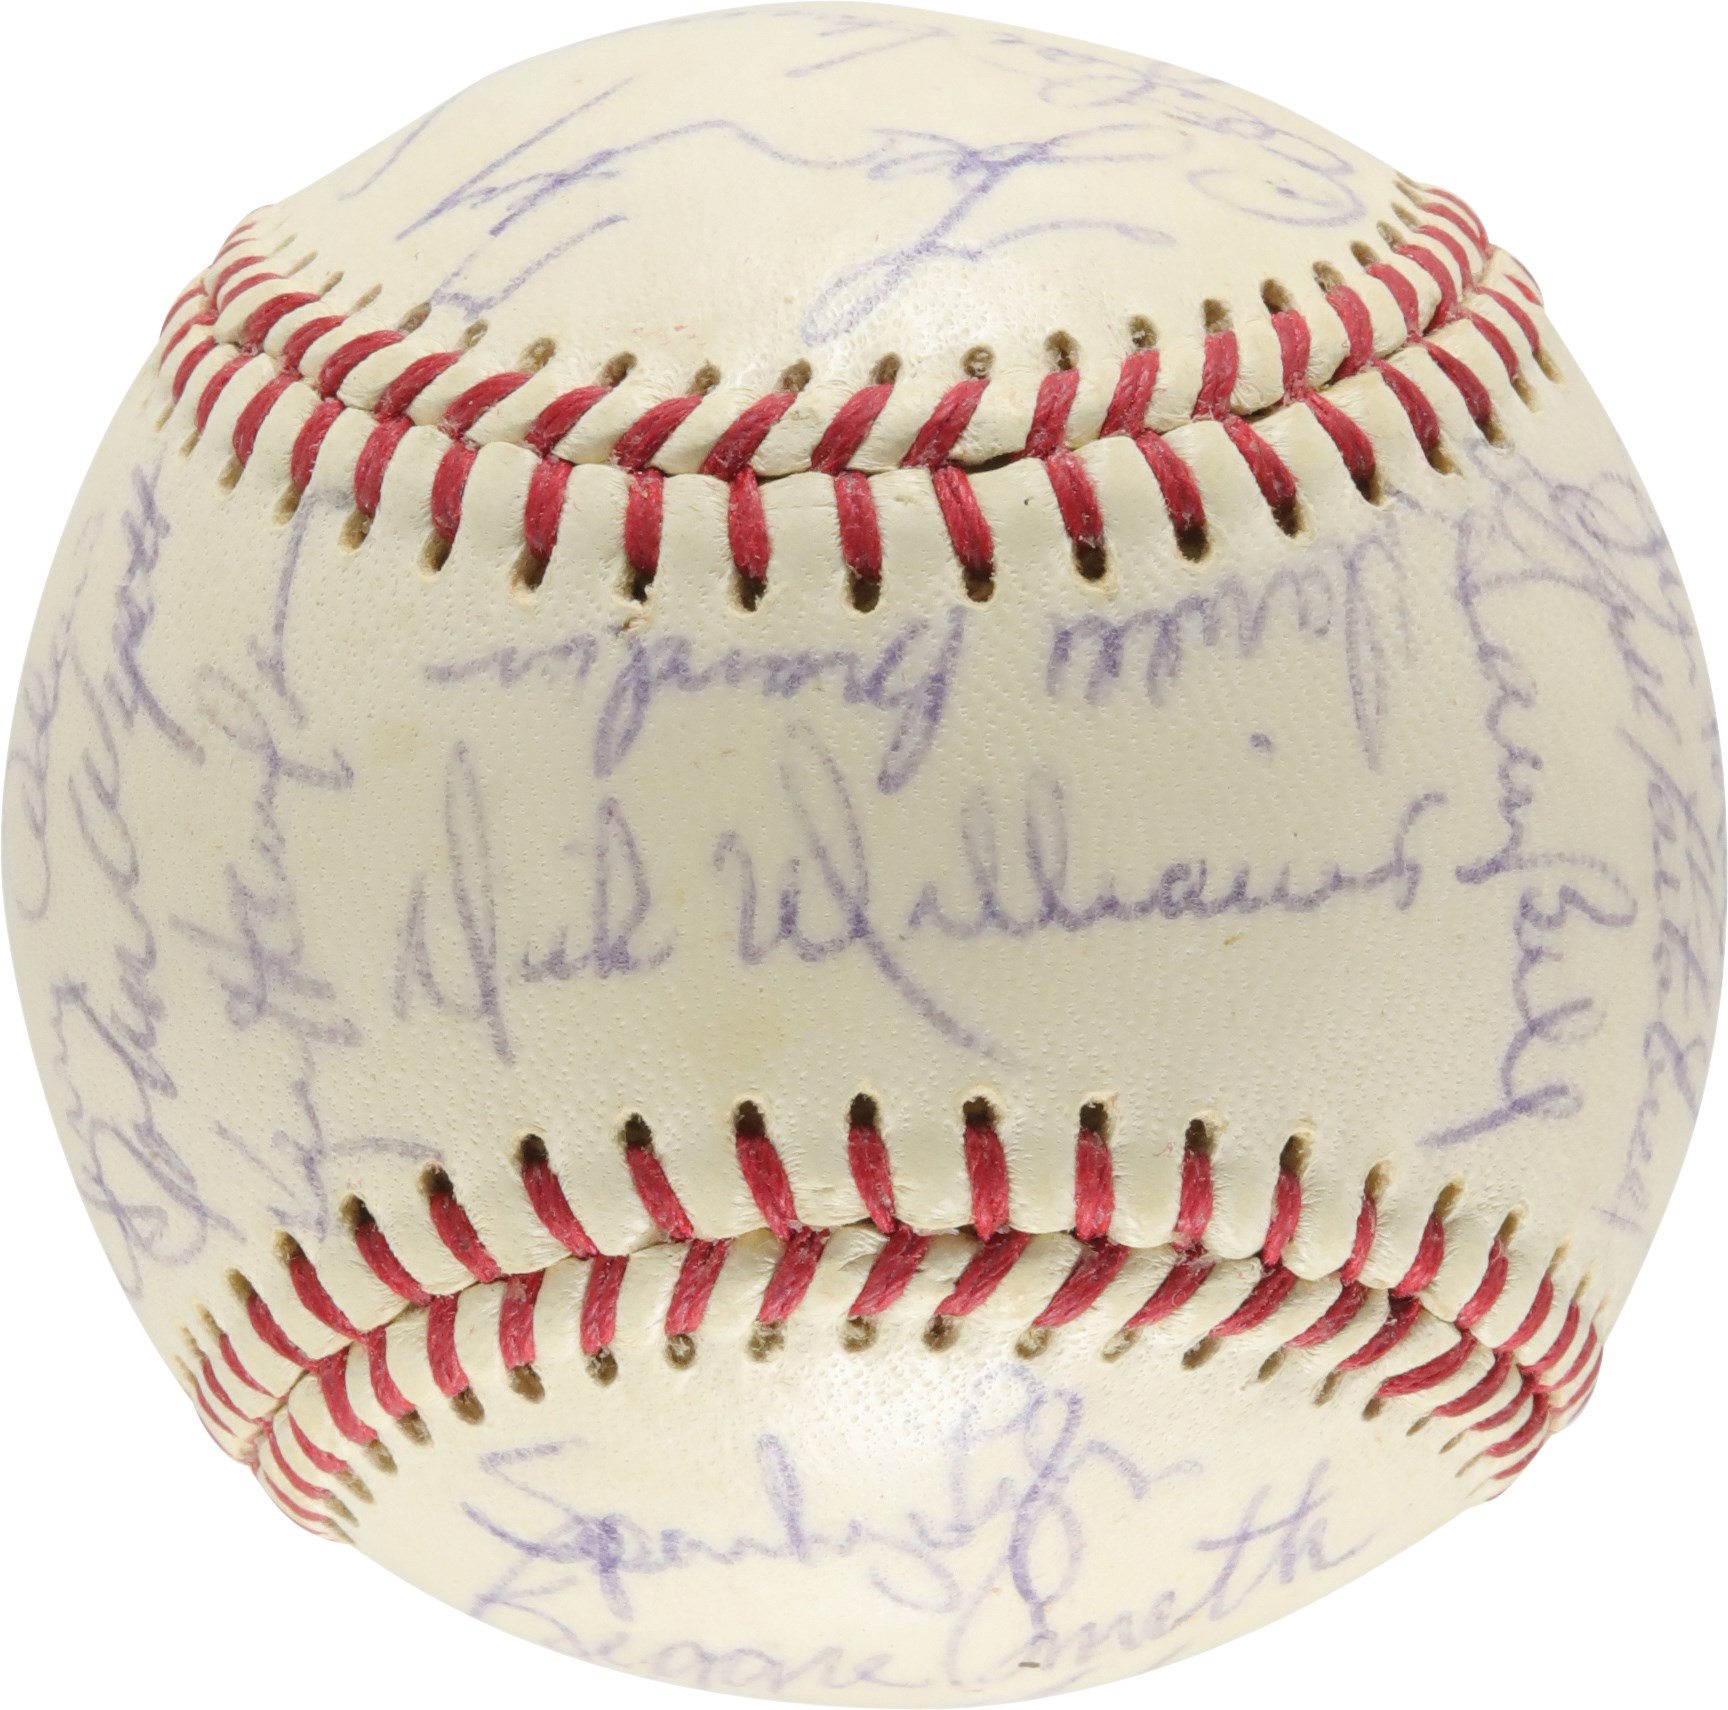 Baseball Autographs - 1967 American League Champion Boston Red Sox Team-Signed Baseball